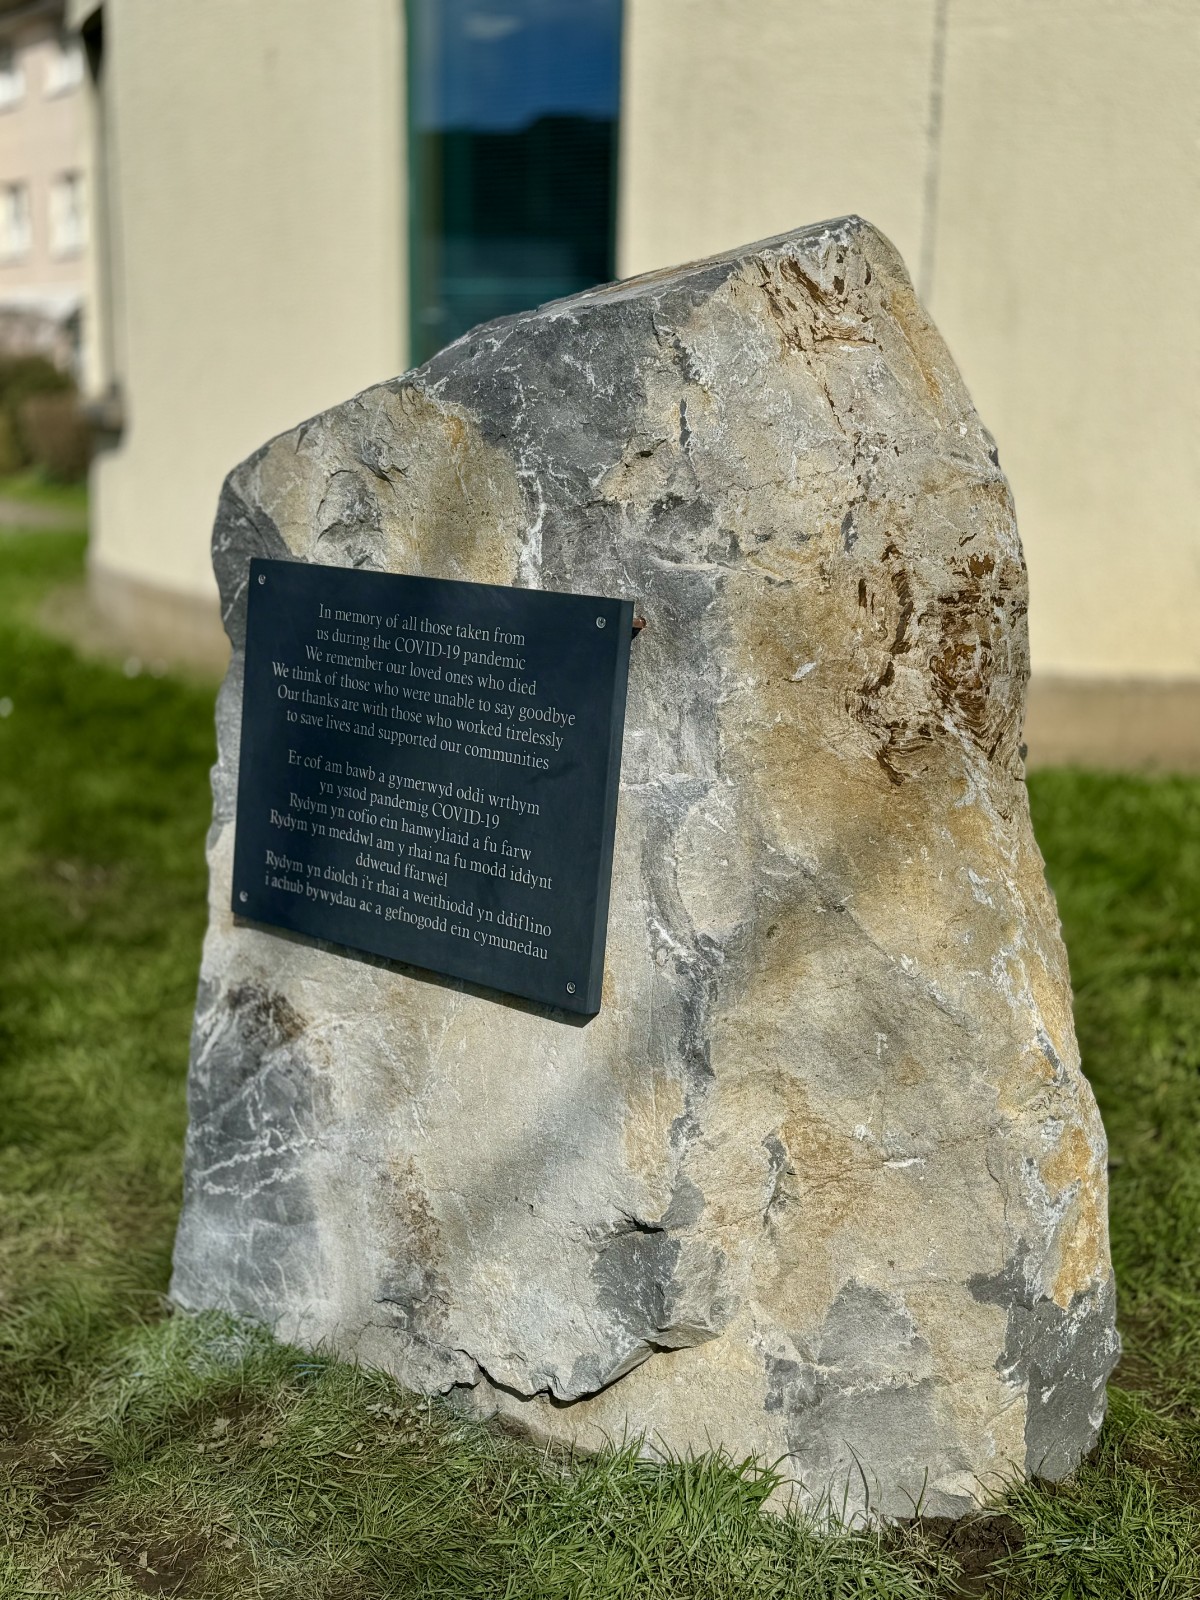 County Hall Covid memorial stone1